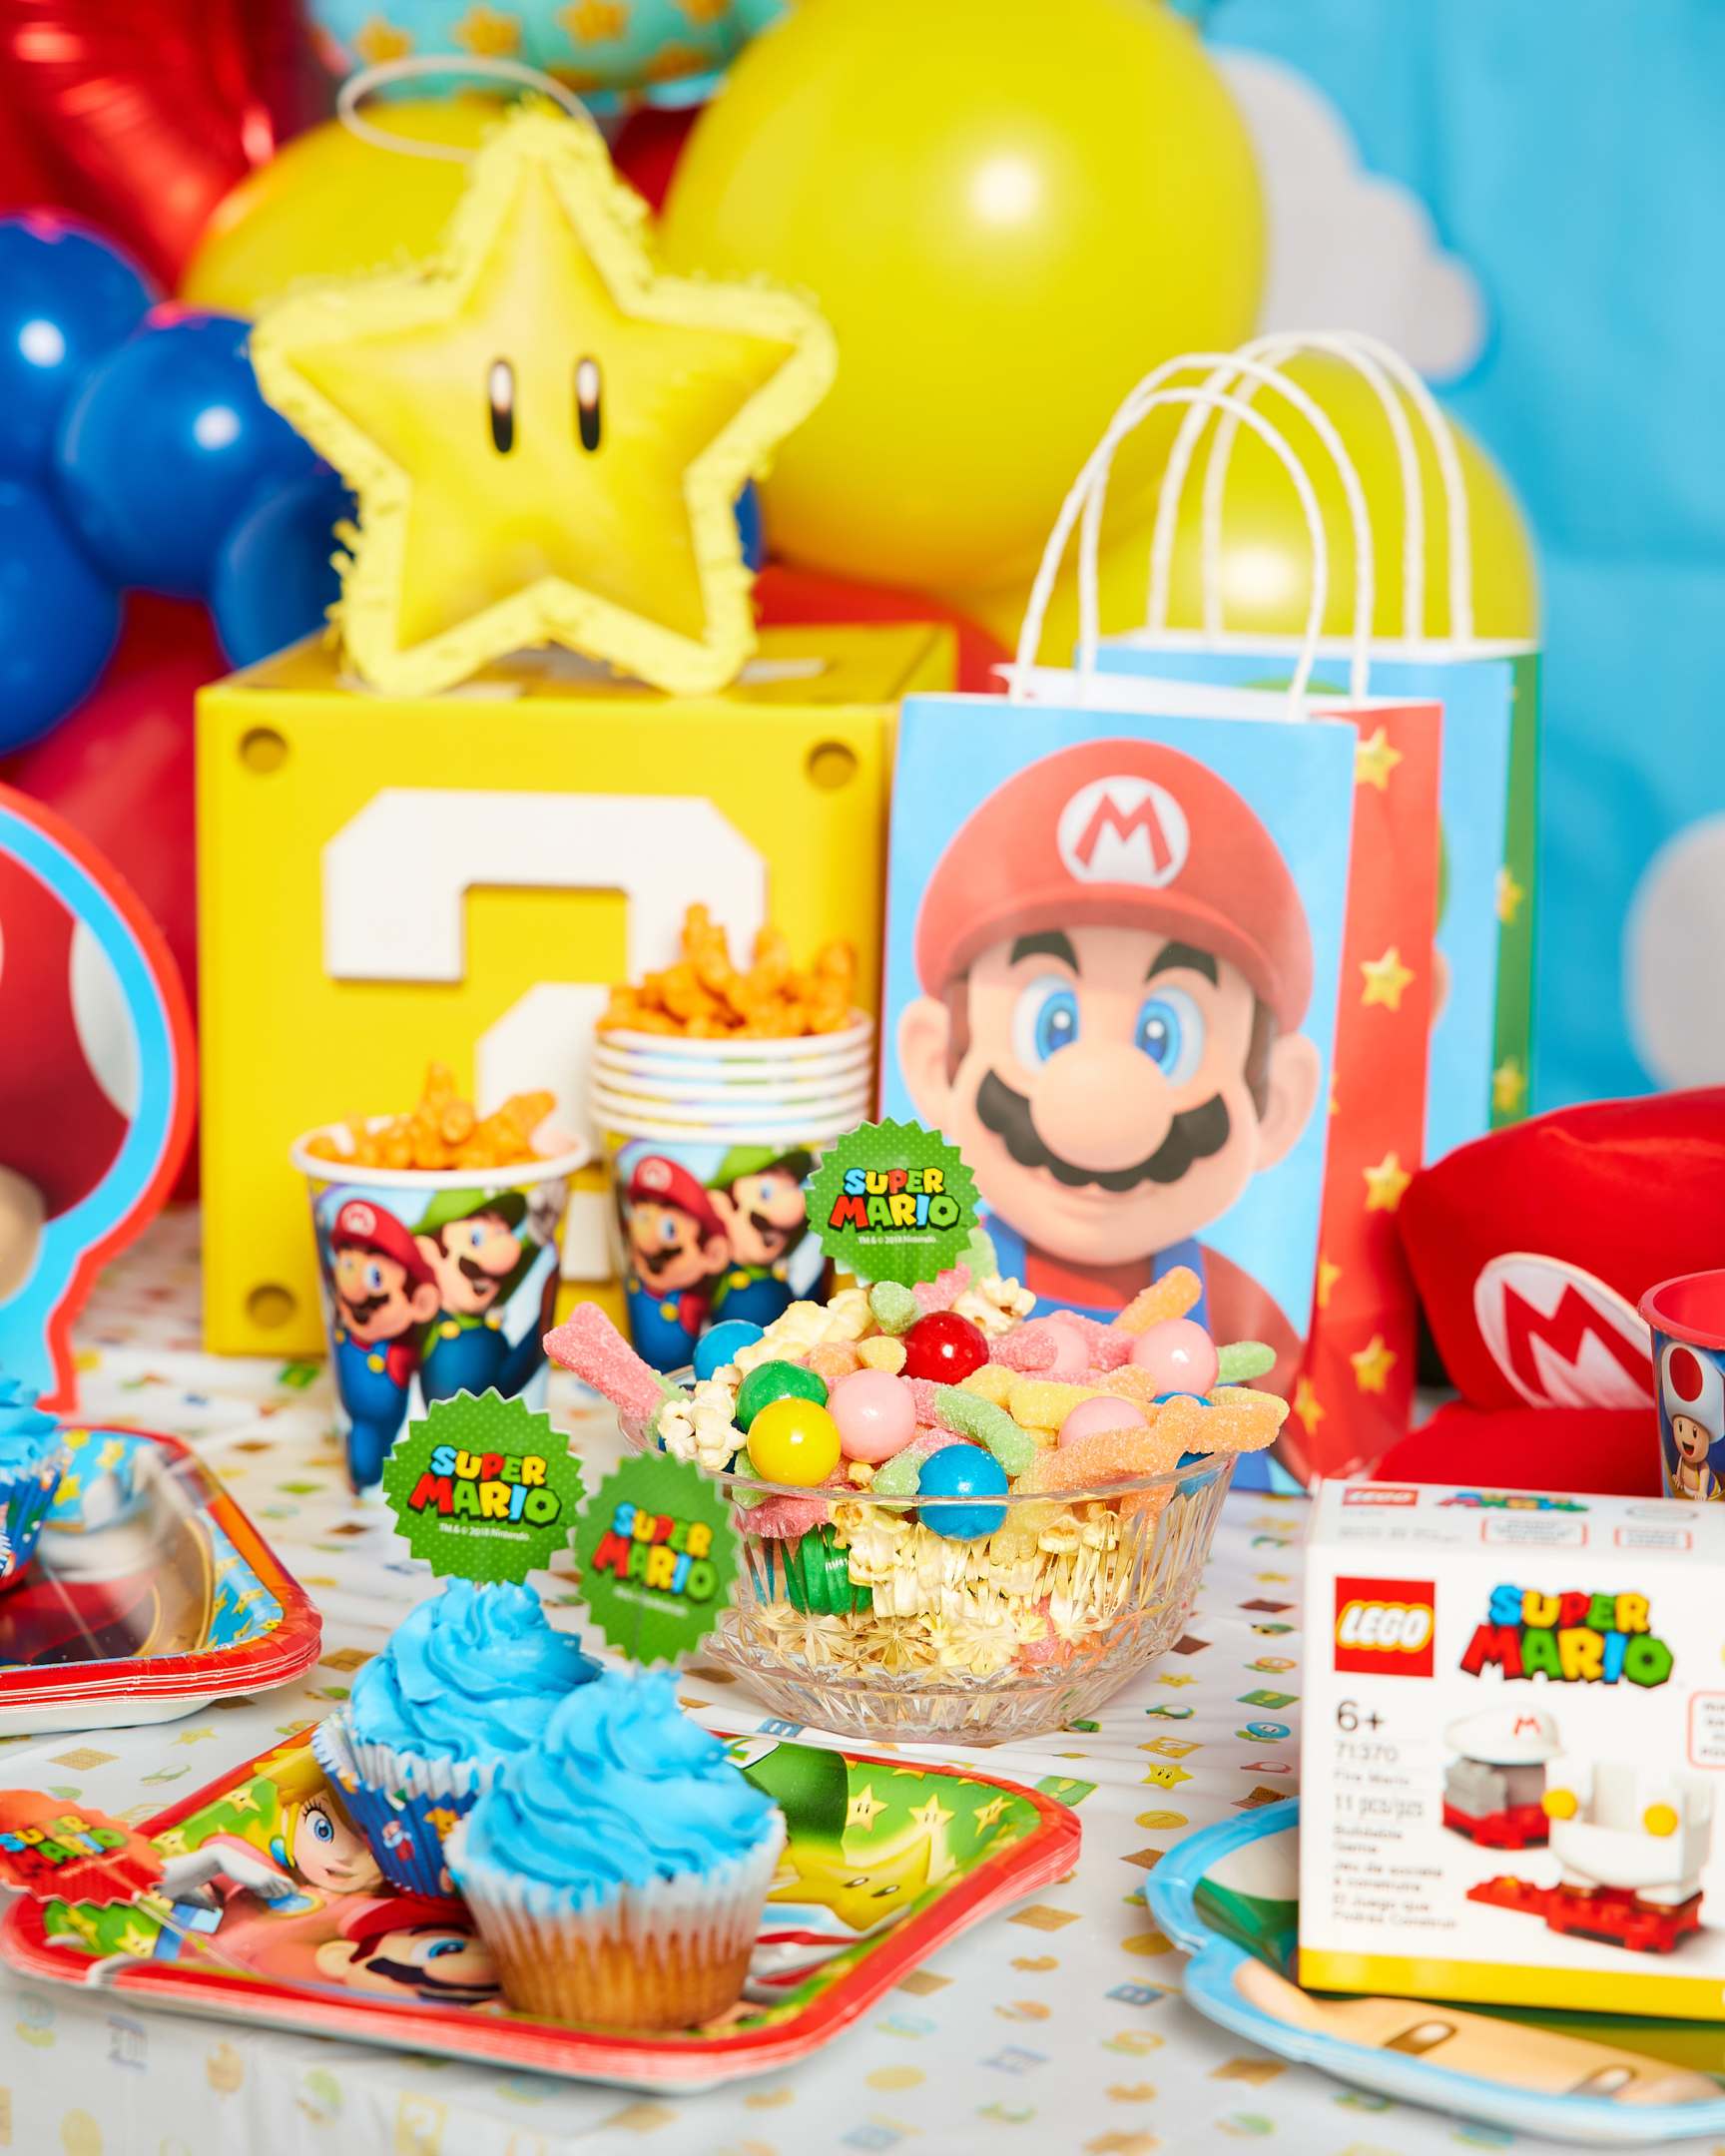 Birthday pinata Mario Bross Movie Birthday Party pinata